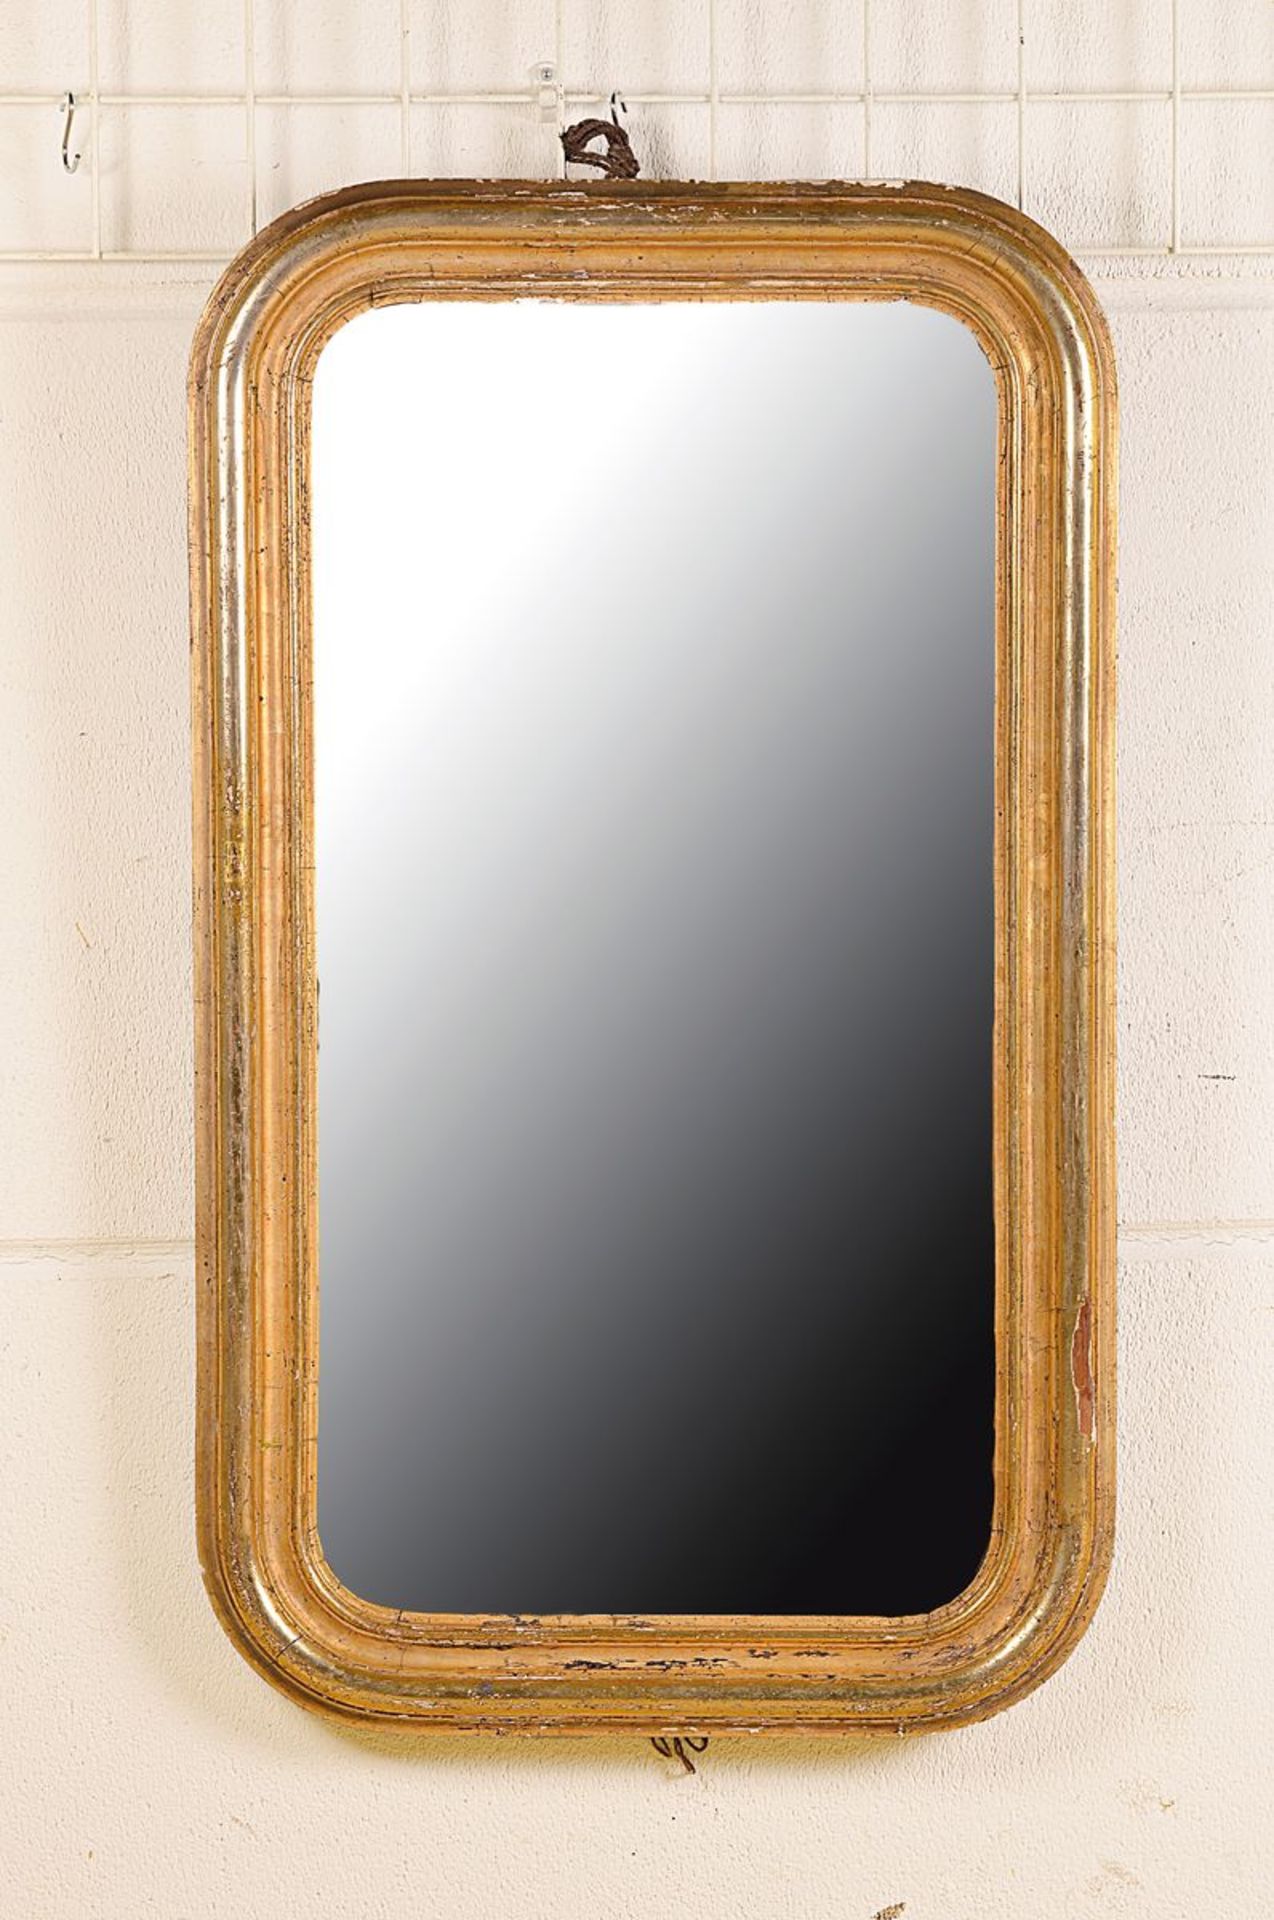 Late Biedermeier Mirror, German, around 1860, molded wooden frame gilt, orig. mirror glass partly